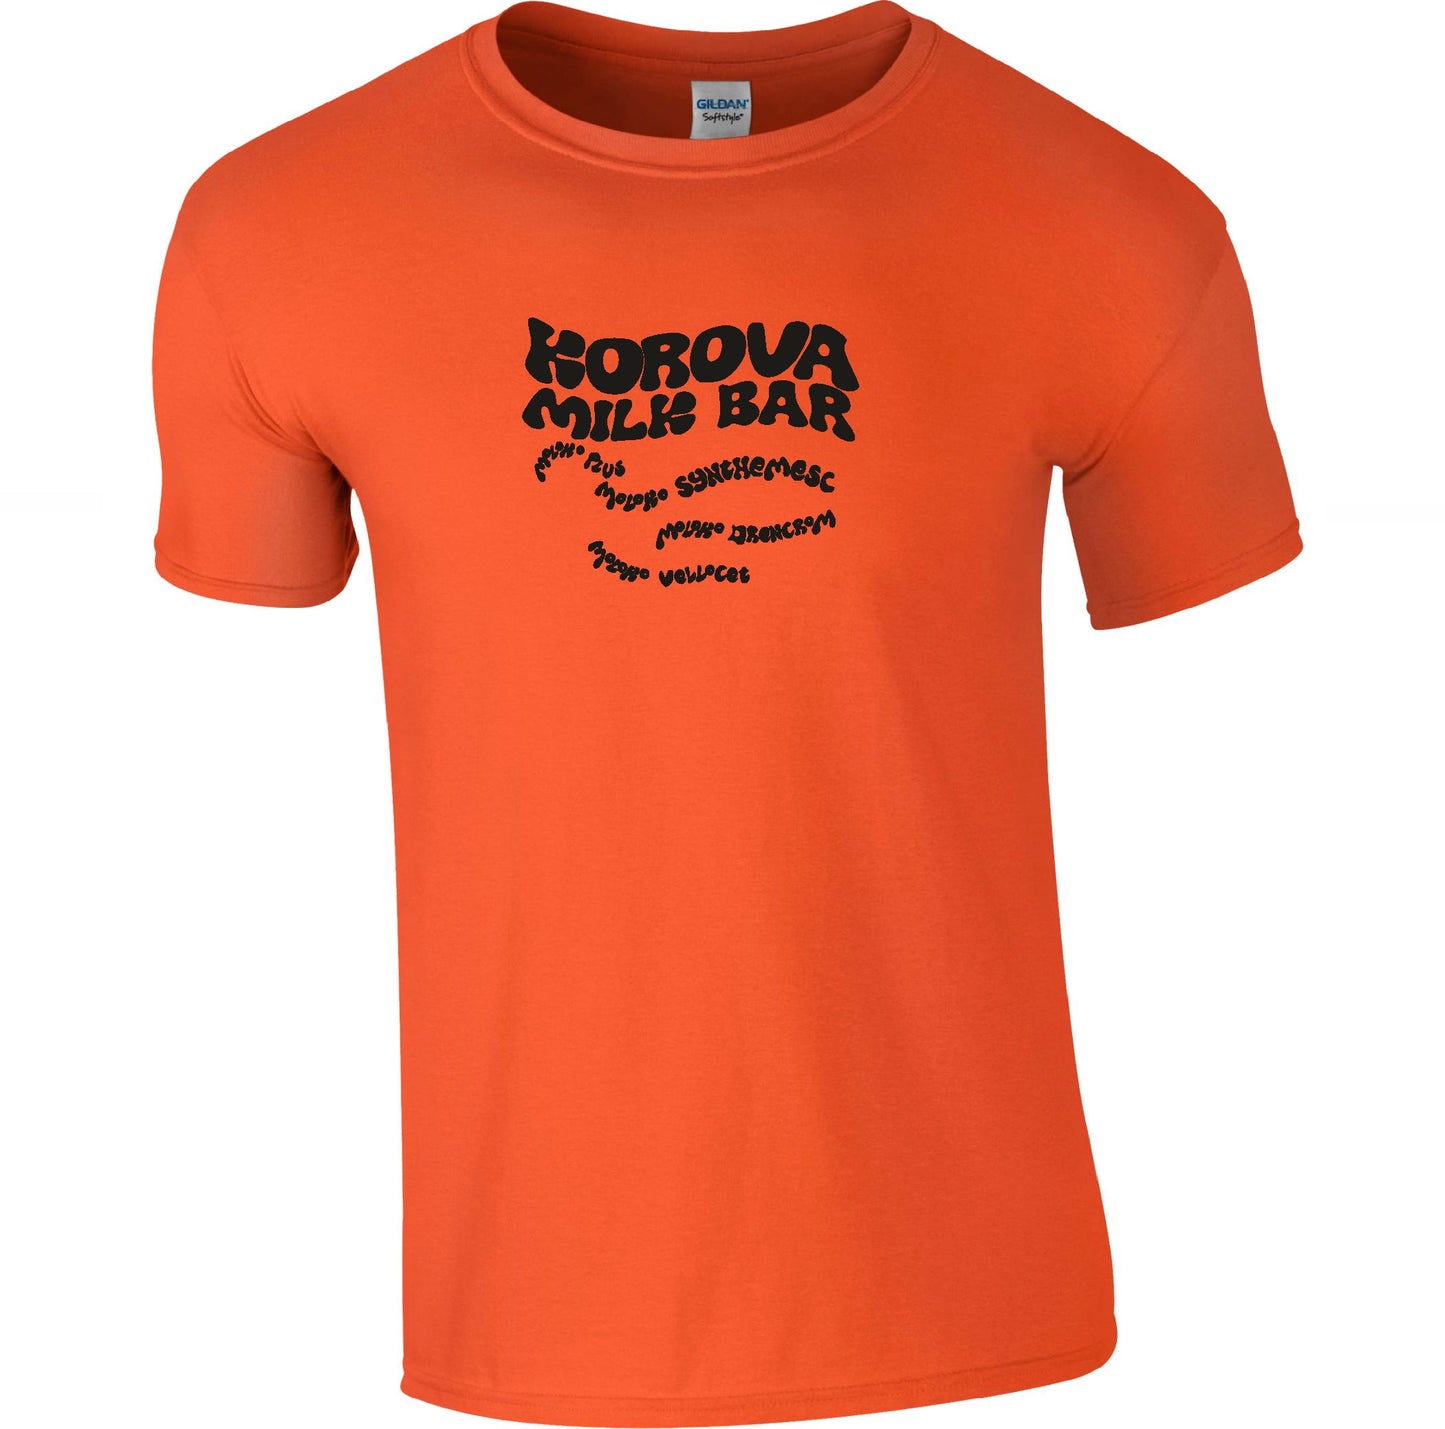 Korova Milk Bar T-Shirt - Clockwork Orange, Psychedelic, Various Colours